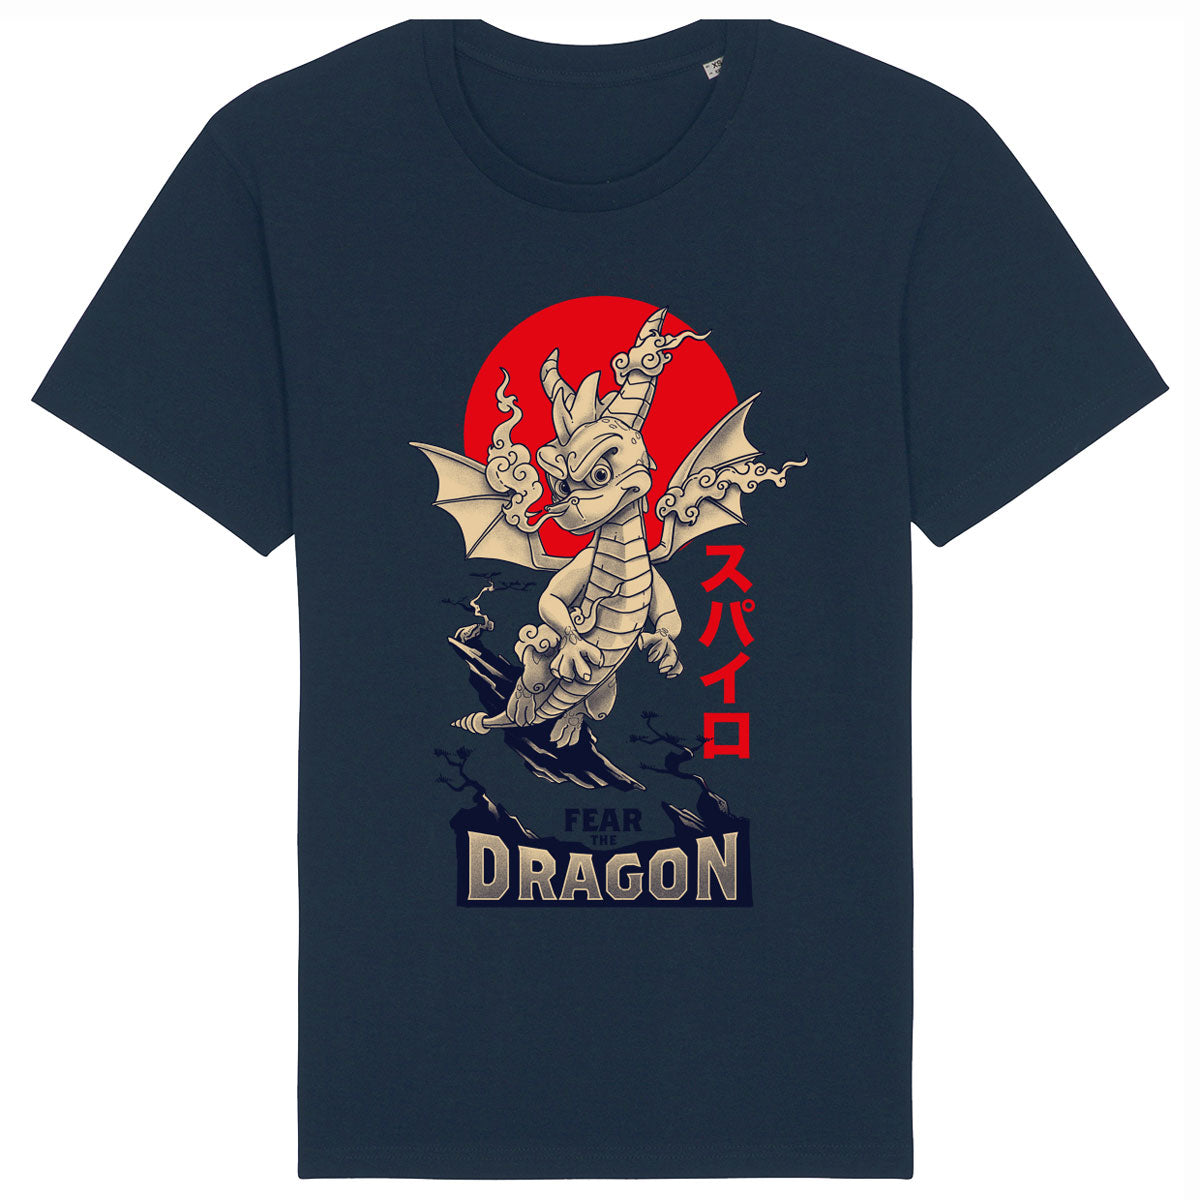 Spyro Fear the Dragon Artist Edition Navy Blue T-Shirt